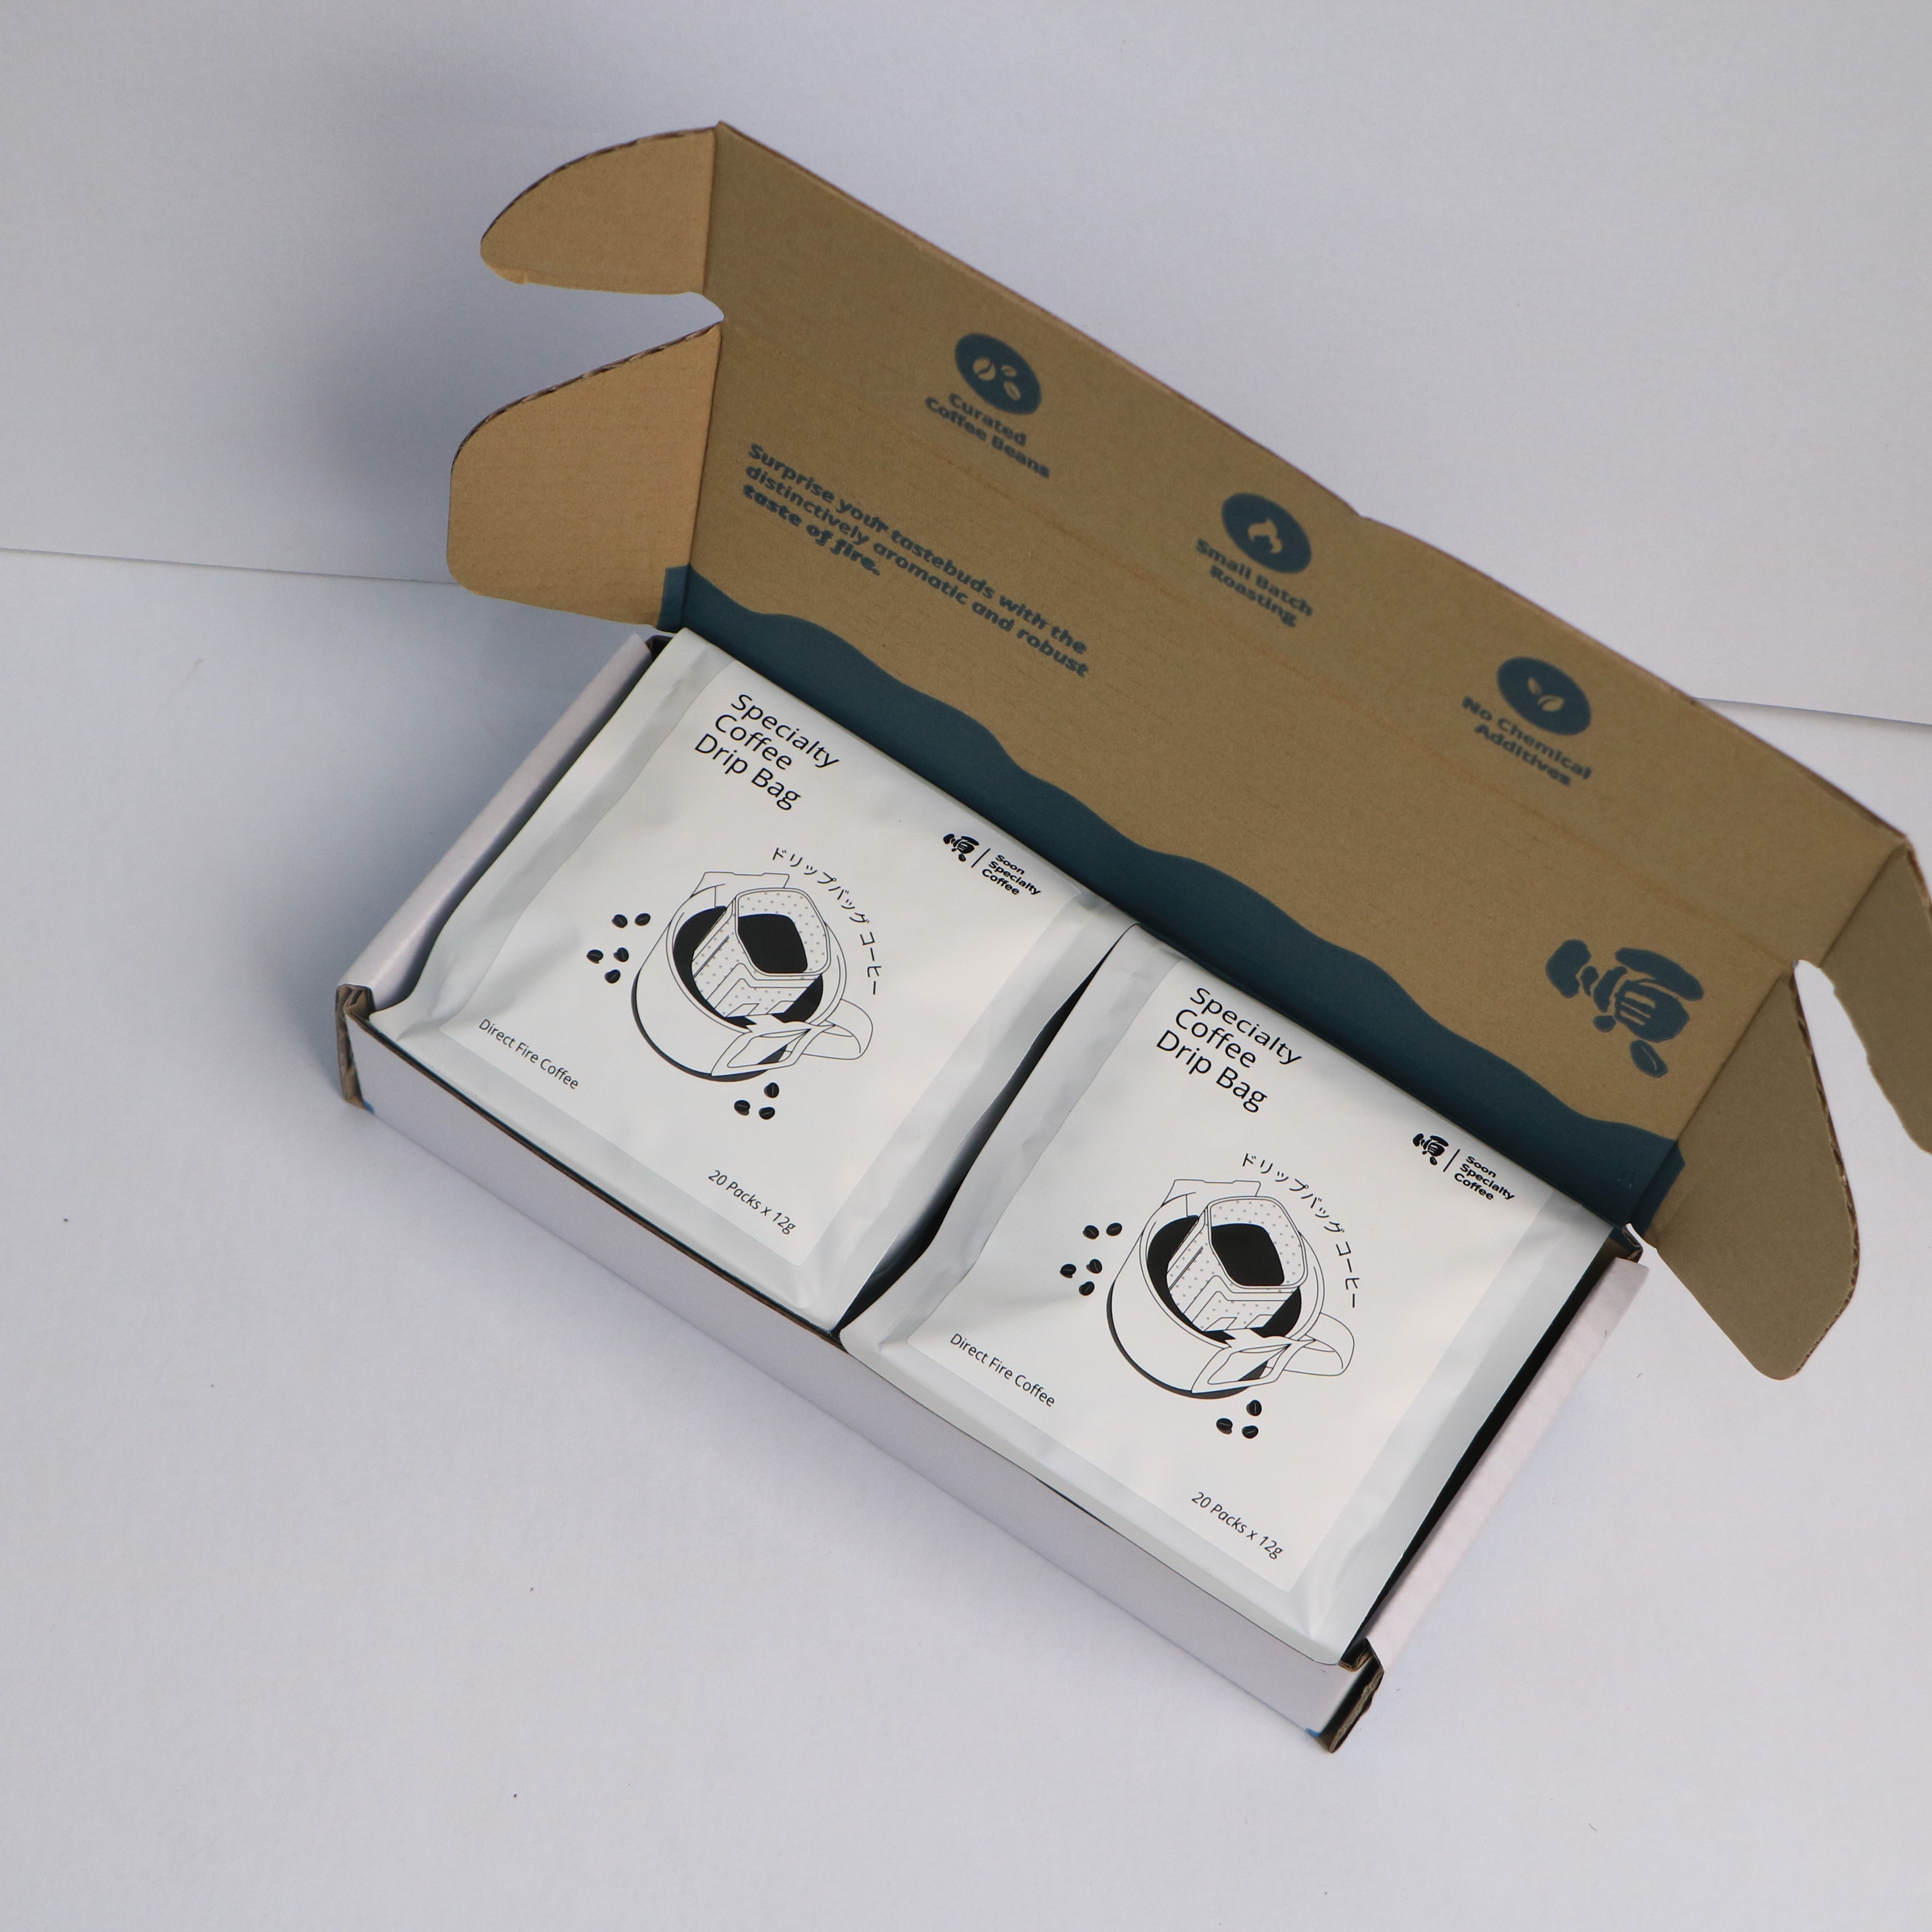 Drip Coffee Box - HARU BLEND - Soon Specialty Coffee